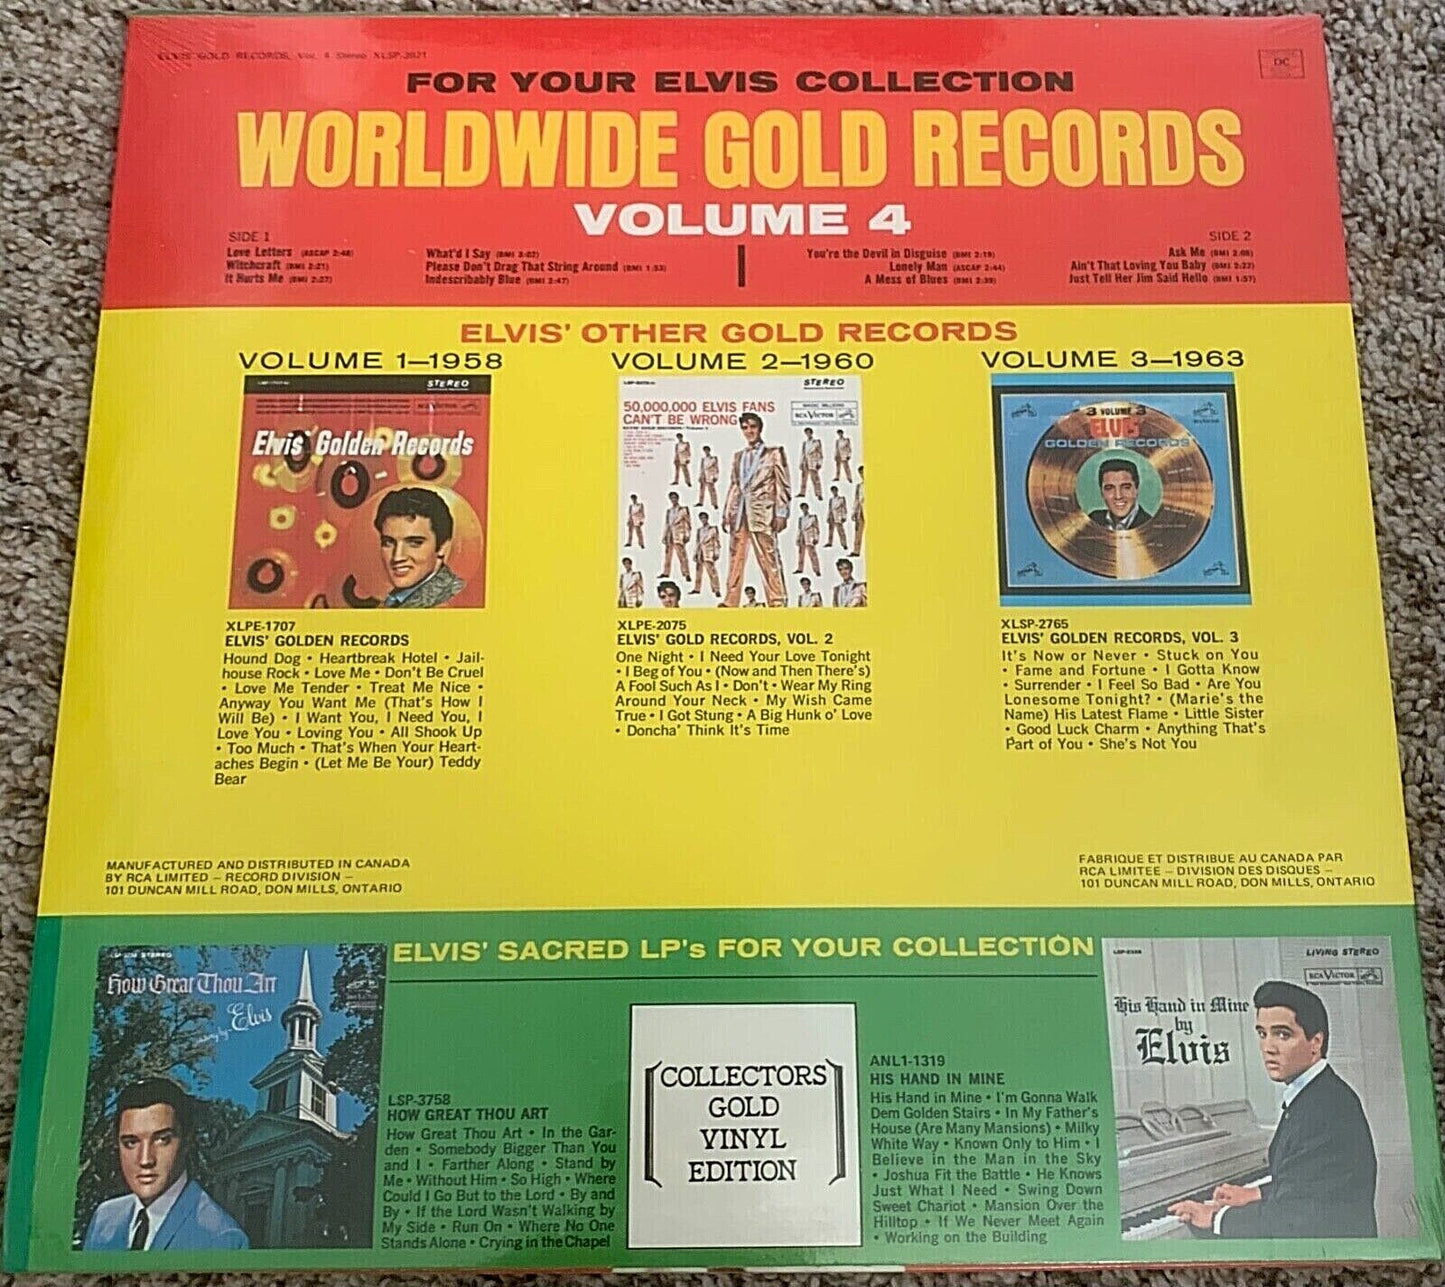 Elvis Presley – Elvis' Gold Records - Volume 4 SEALED Colored Vinyl  LP album